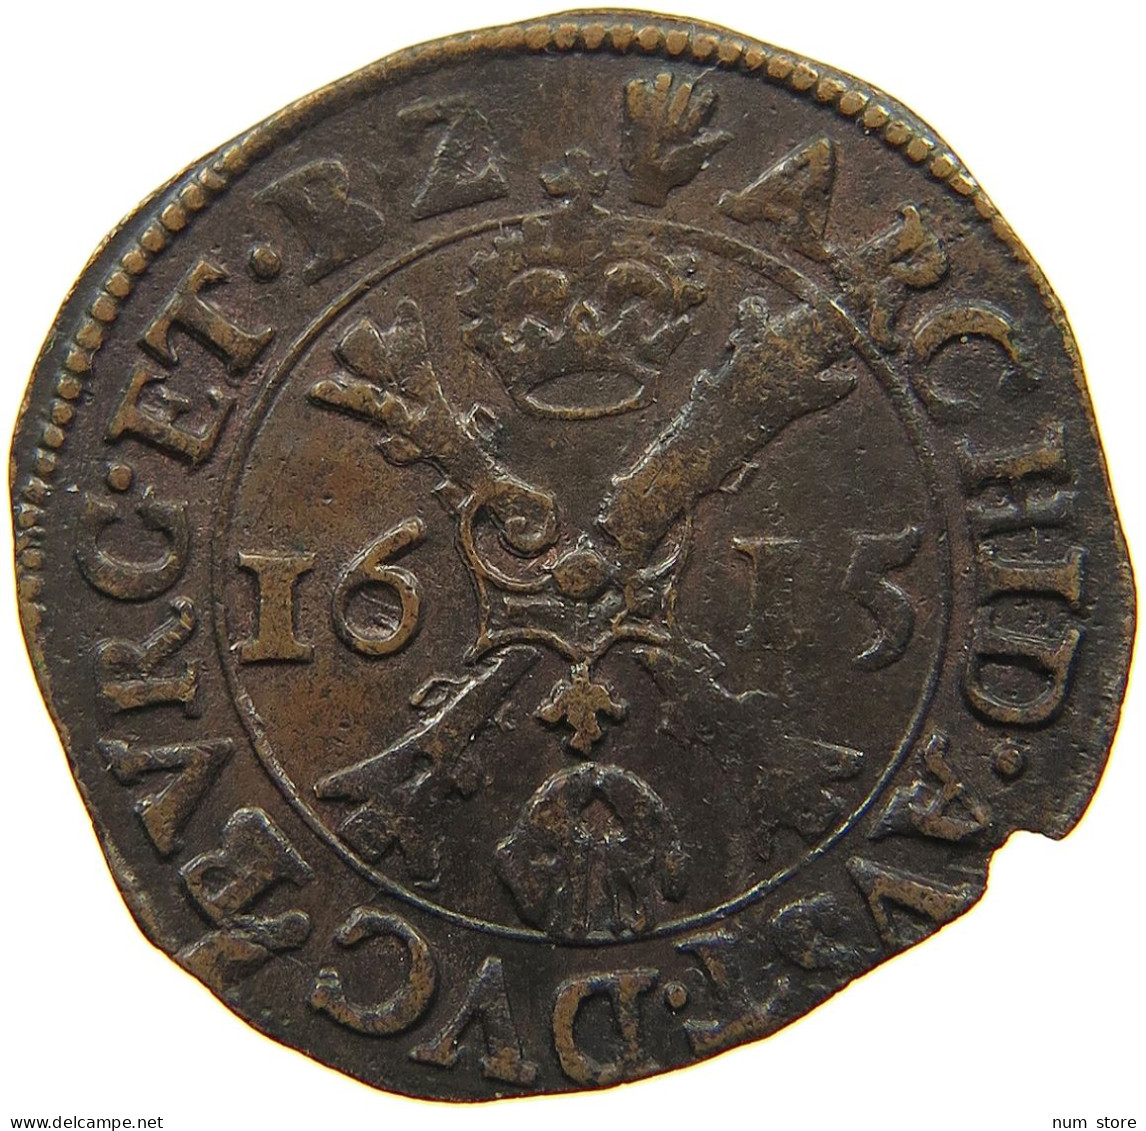 SPANISH NETHERLANDS GIGOT LIARD 1615 Albert & Isabella (1598-1621) #t109 0107 - 1556-1713 Spanish Netherlands